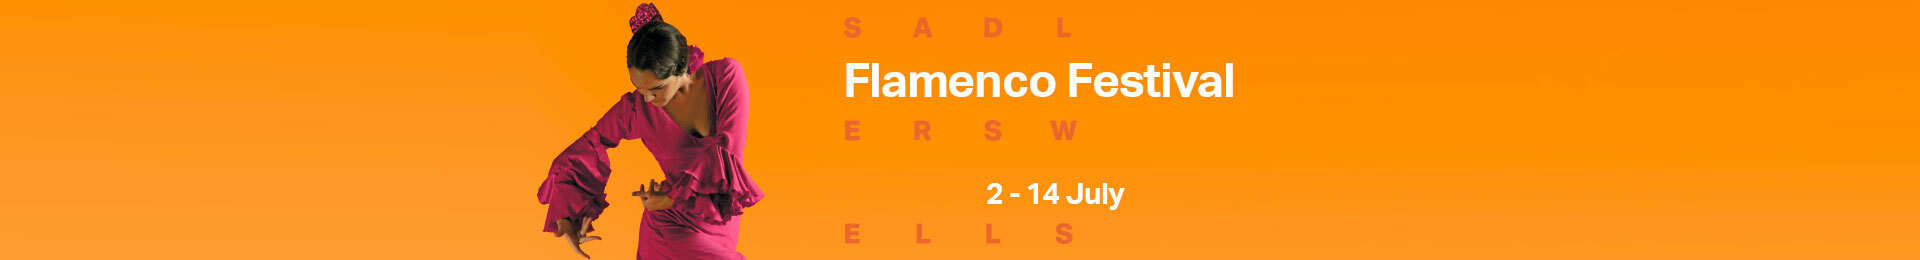 Flamenco Festival: Rocío Molina banner image